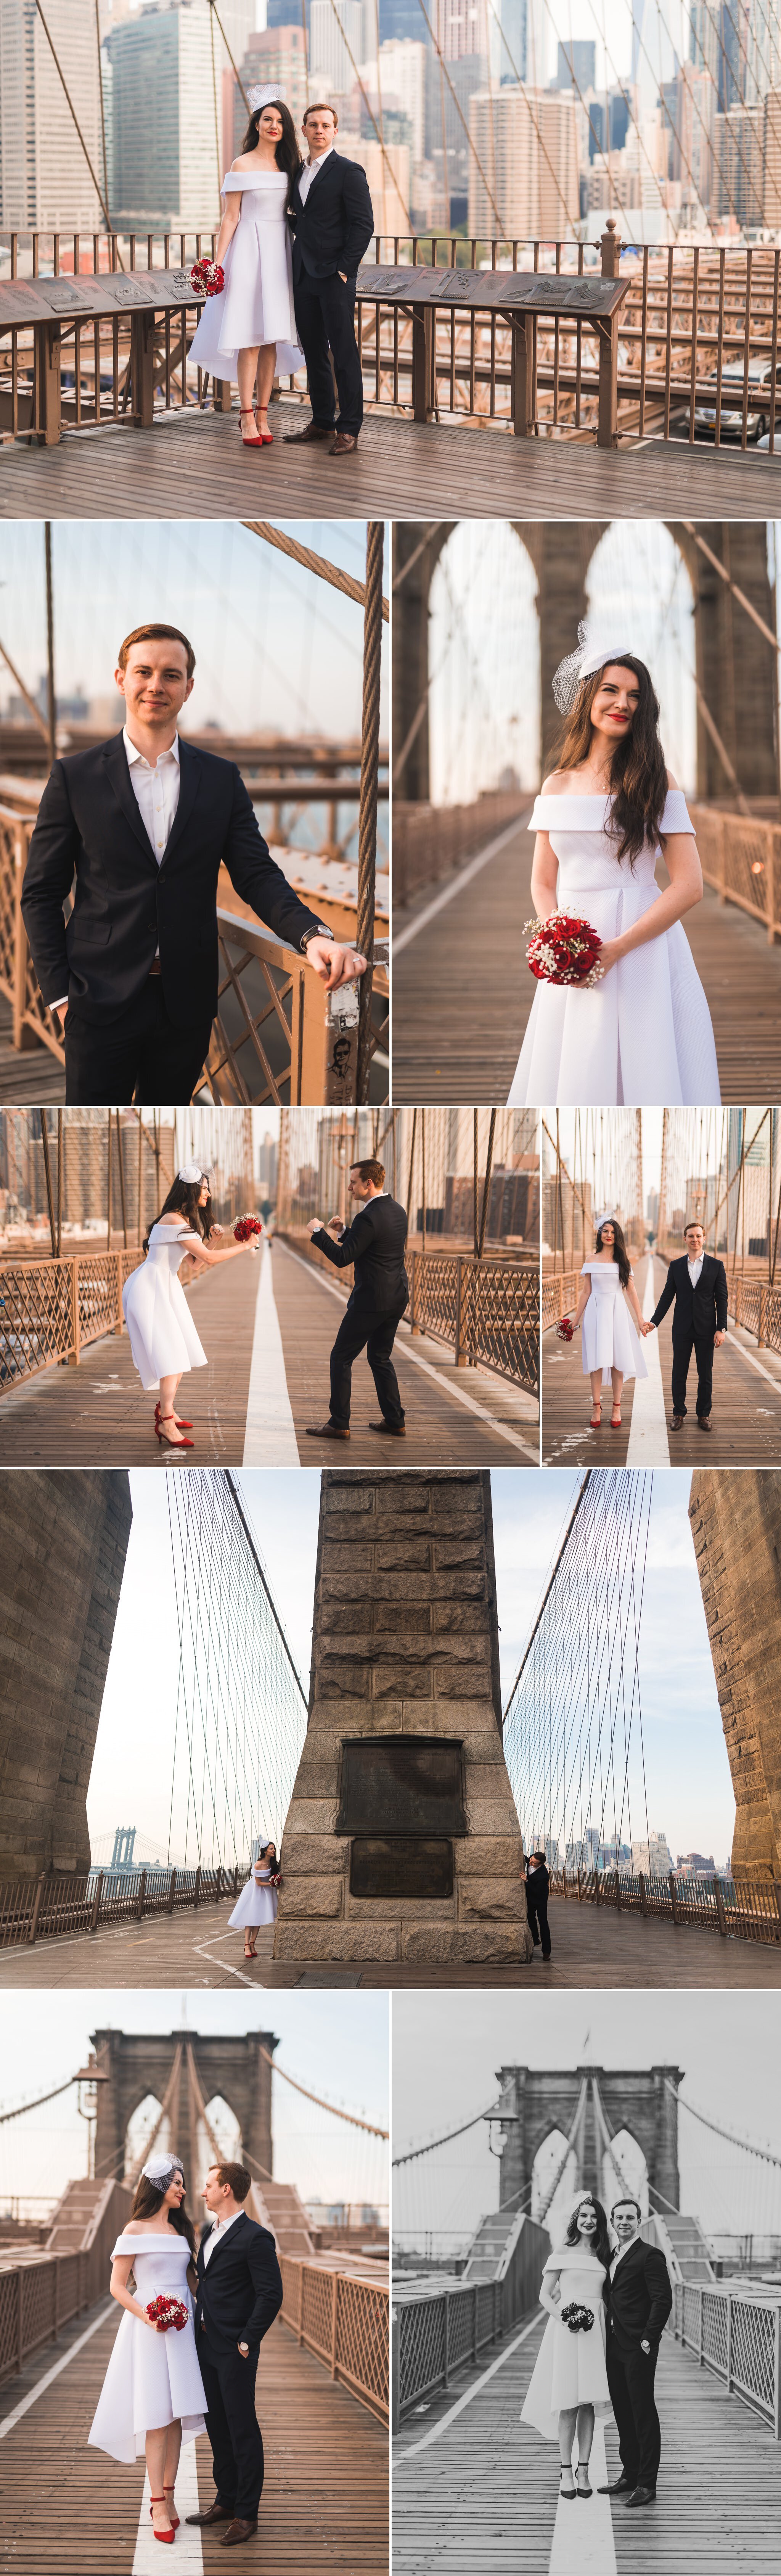 jenny-alex-city-hall-brooklyn-bridge-wedding-photography (1).jpg